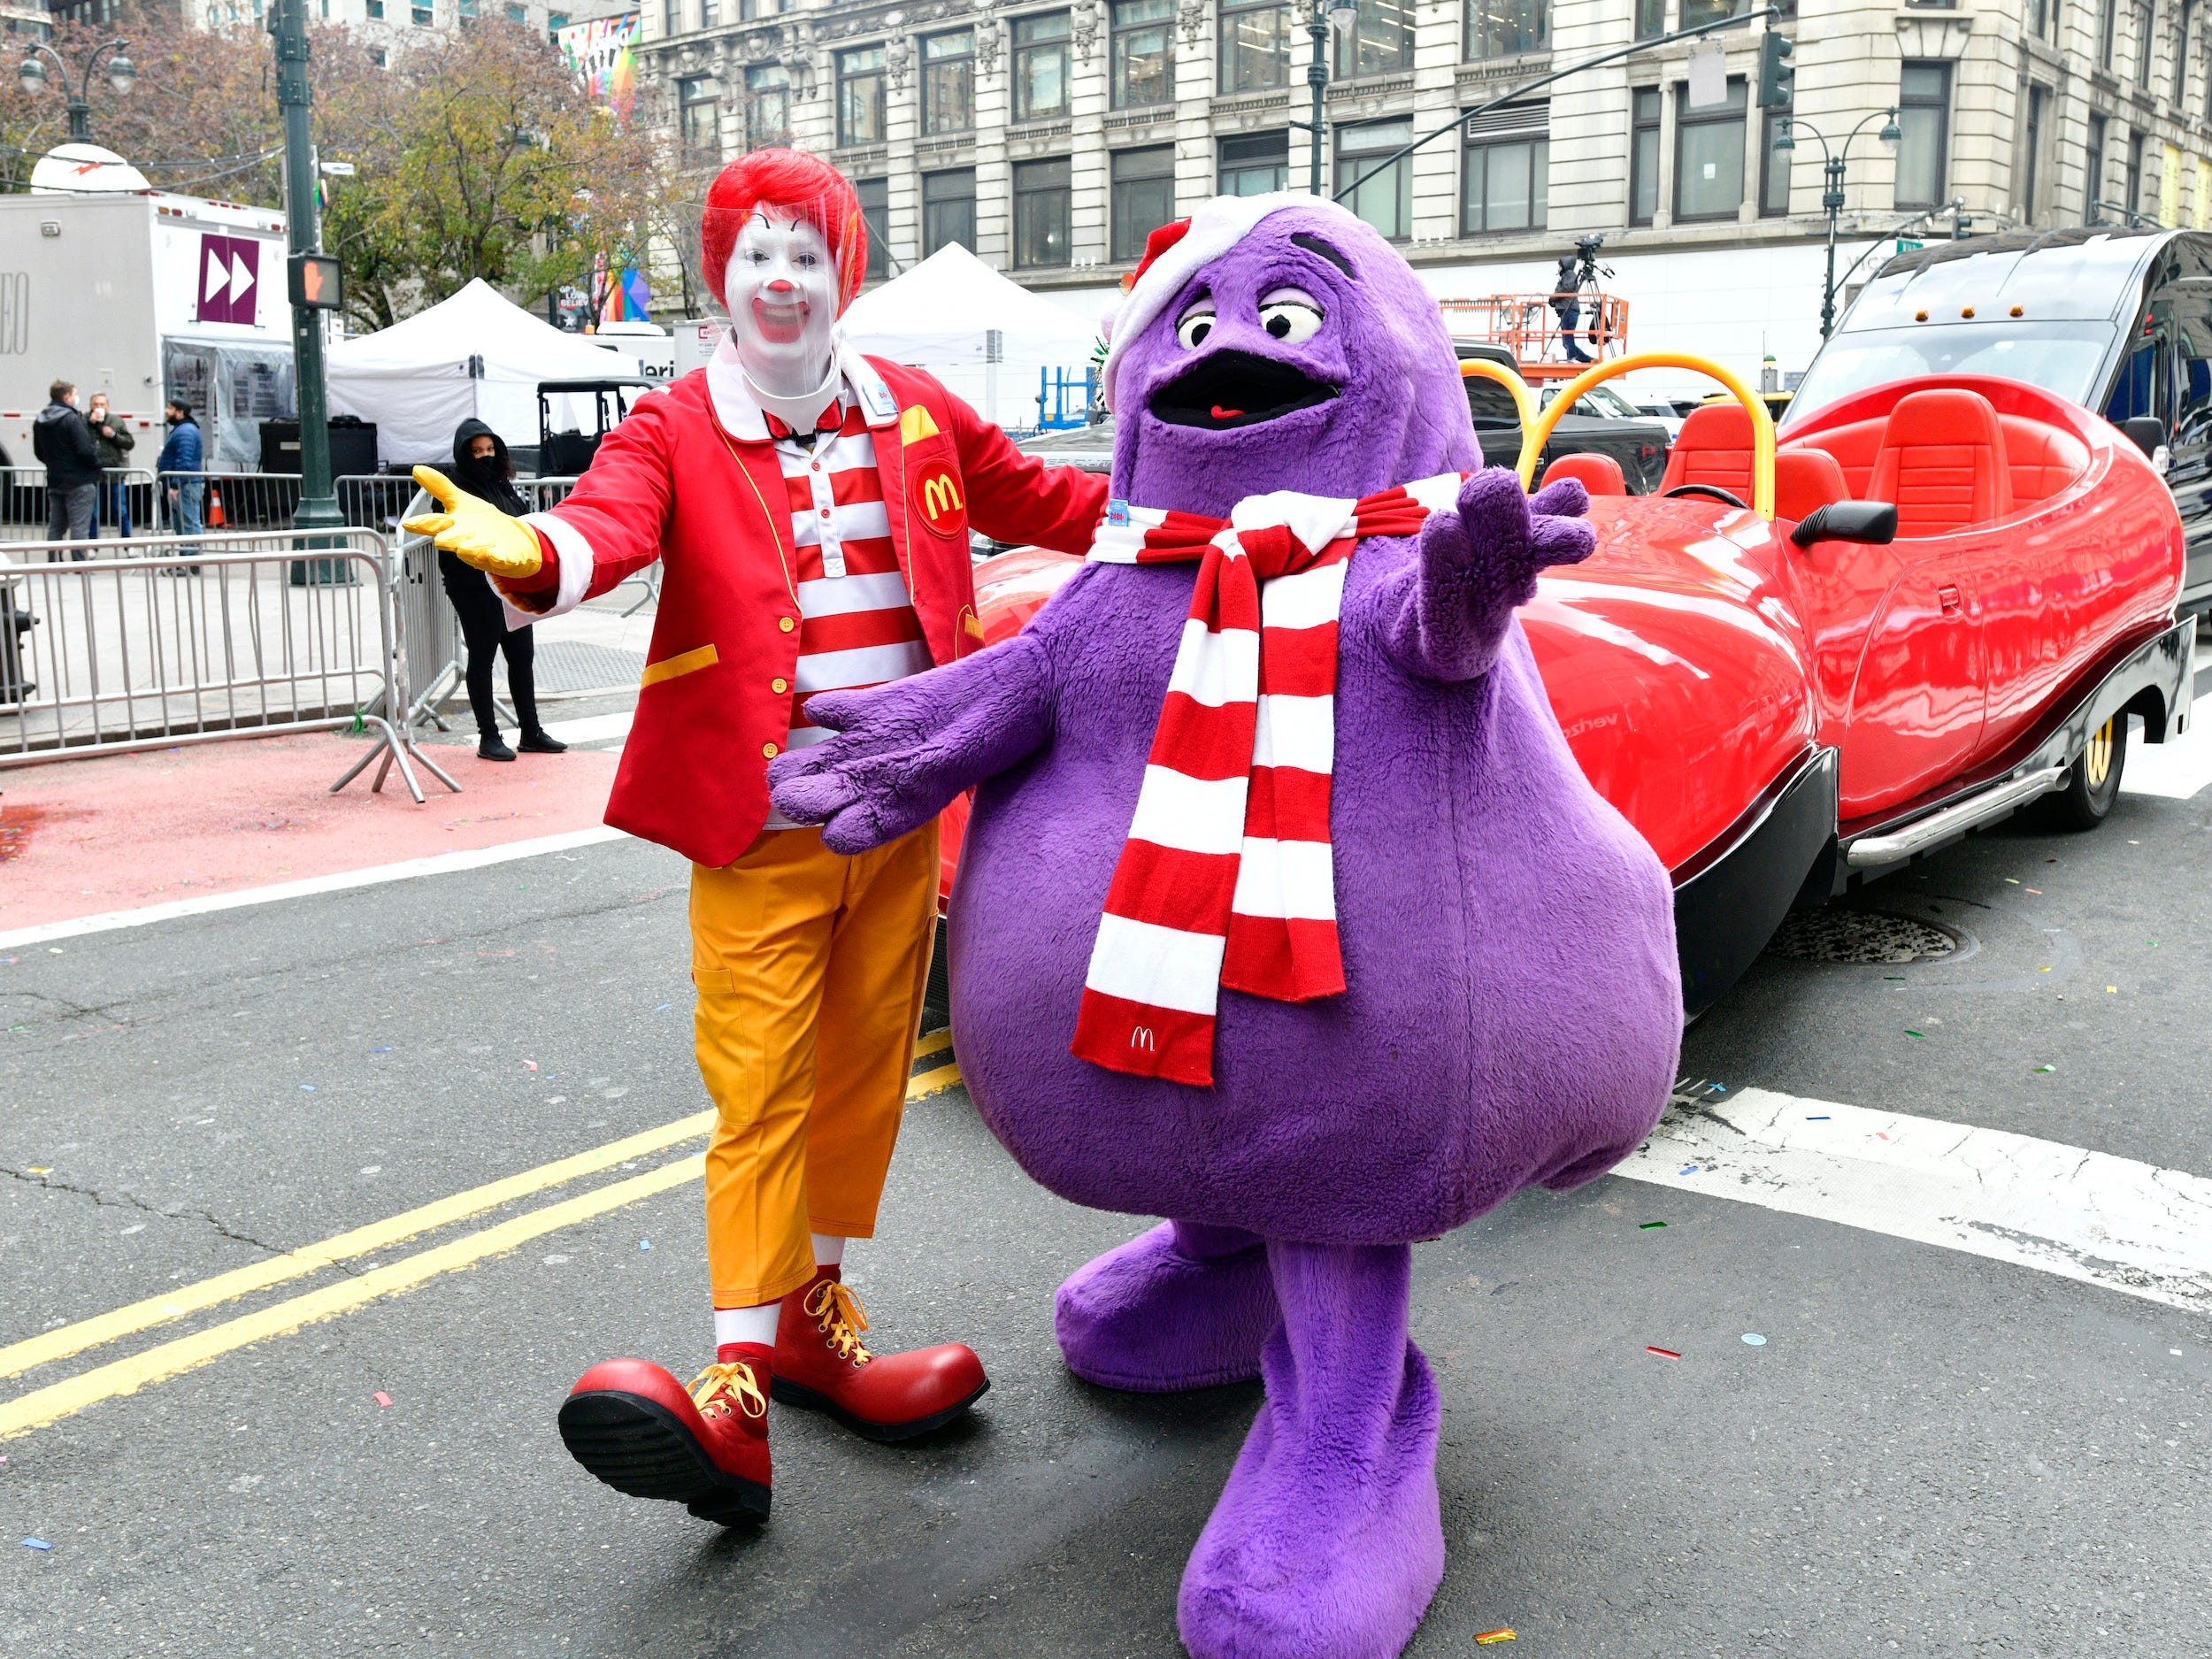 Grimace, the fuzzy purple McDonald's mascot who loves milkshakes, is